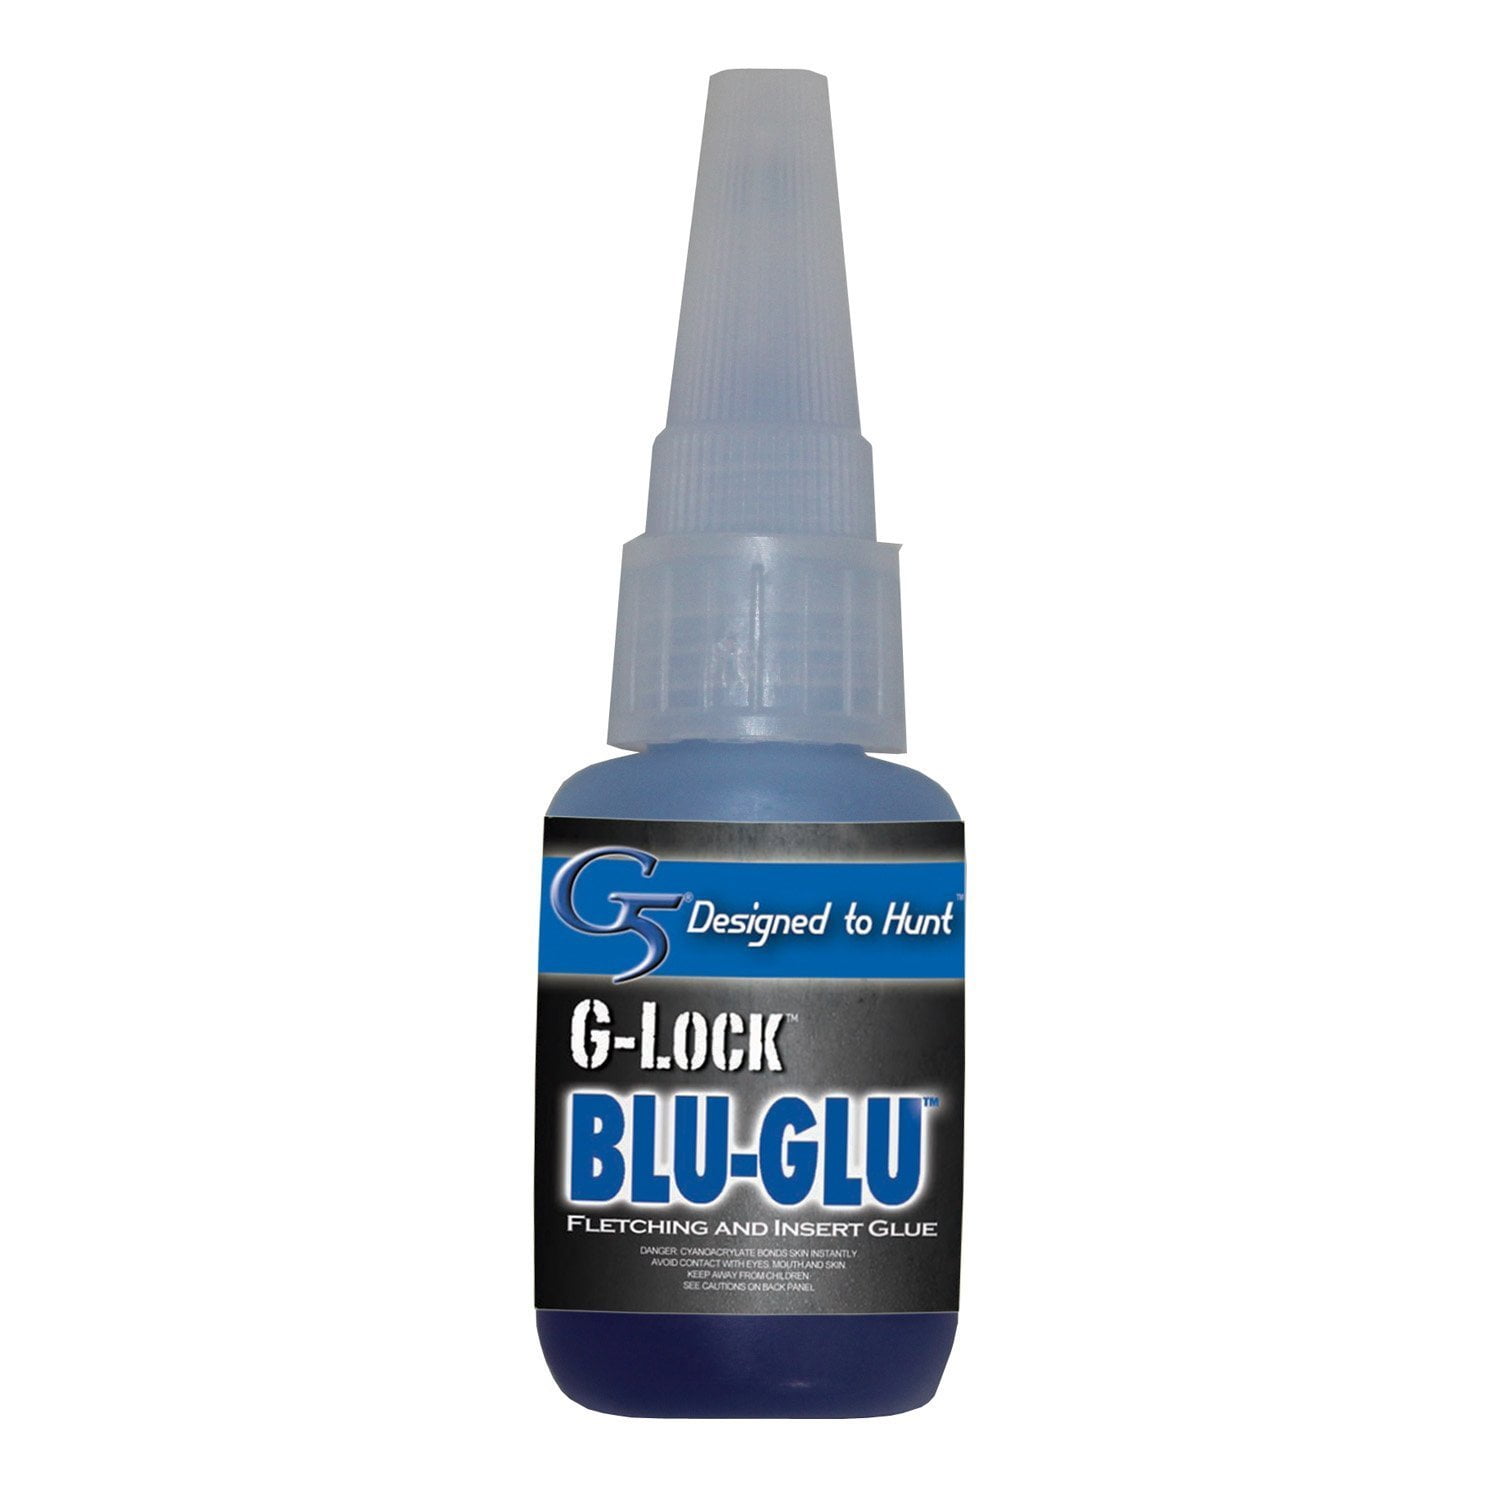 G5 Outdoors G-Lock Blu-Glu Fletching and Insert Glue